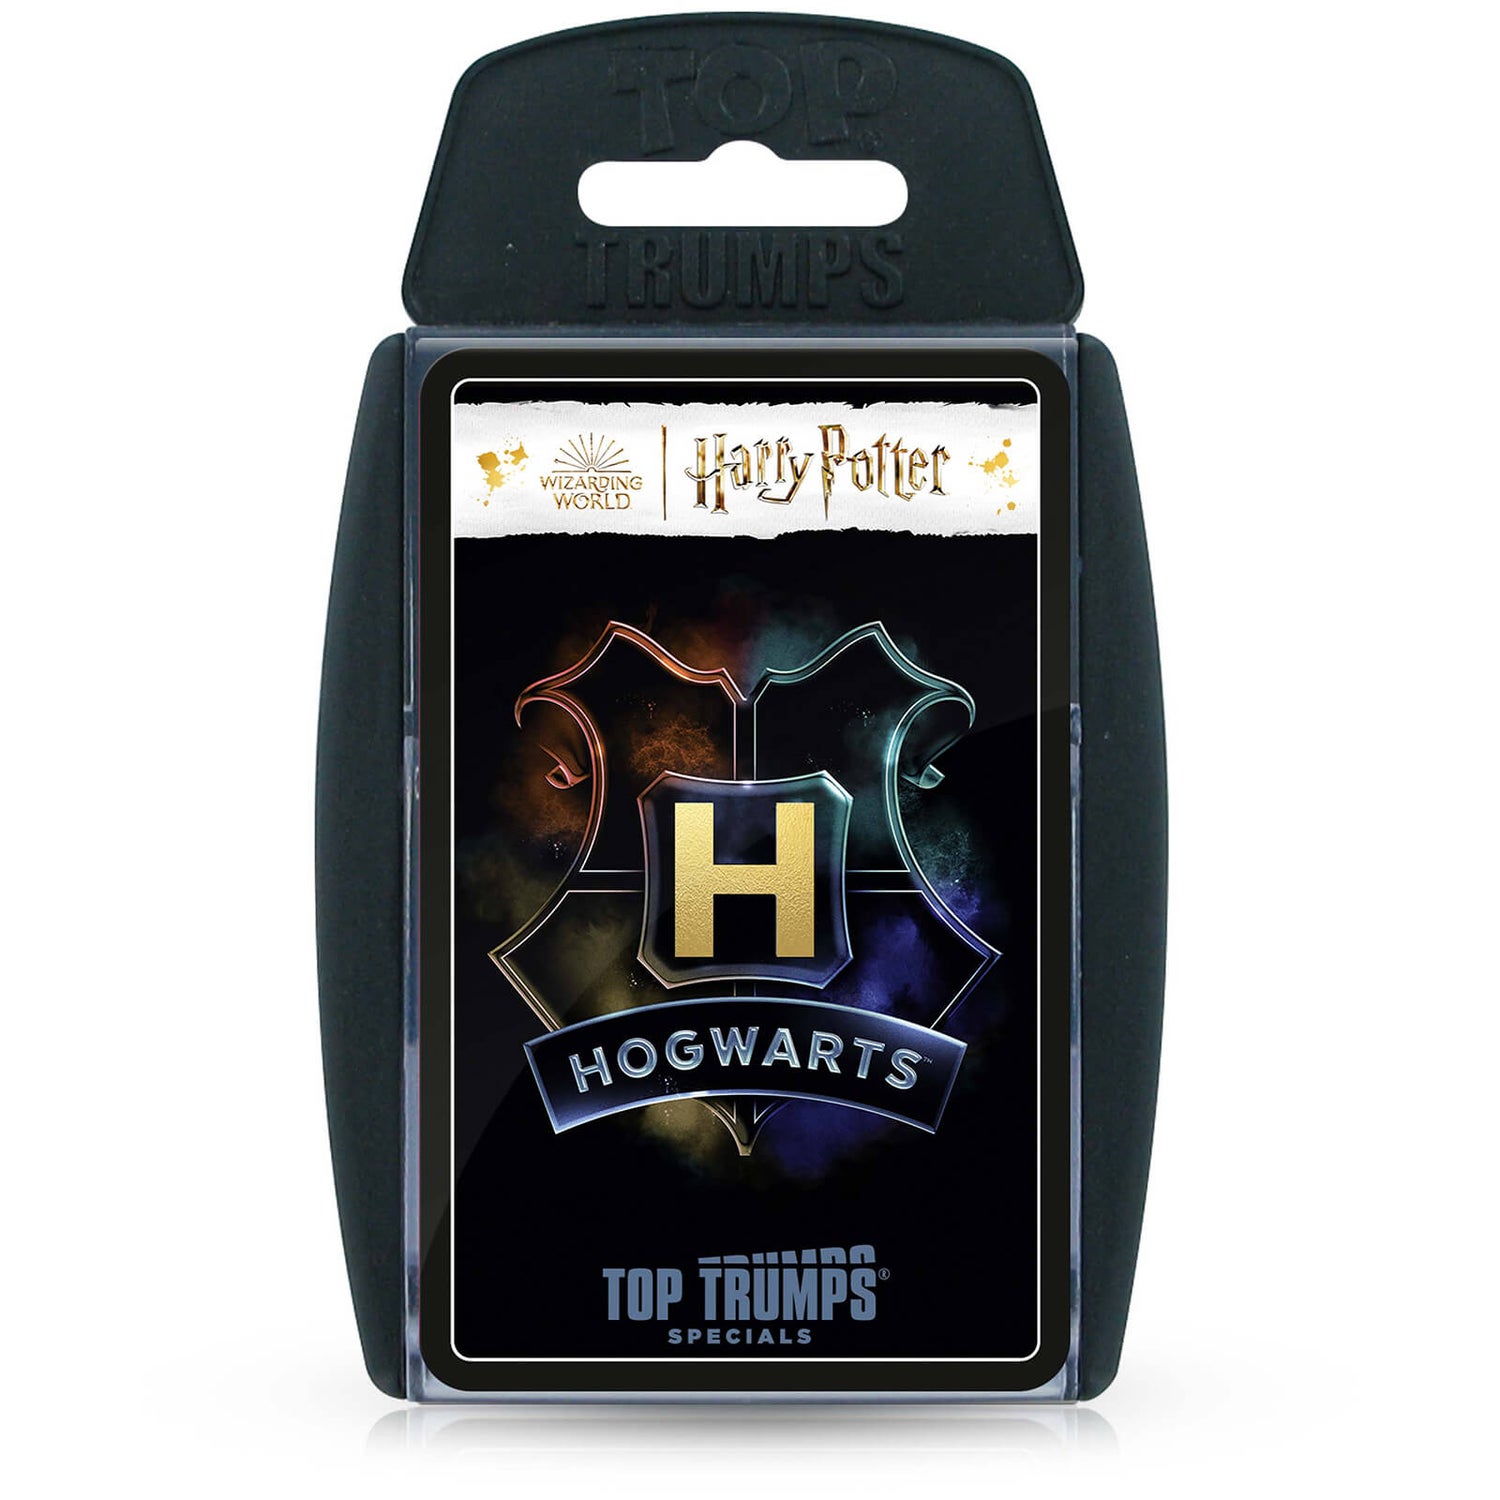 Top Trumps Specials - Harry Potter Heroes of Hogwarts Edition